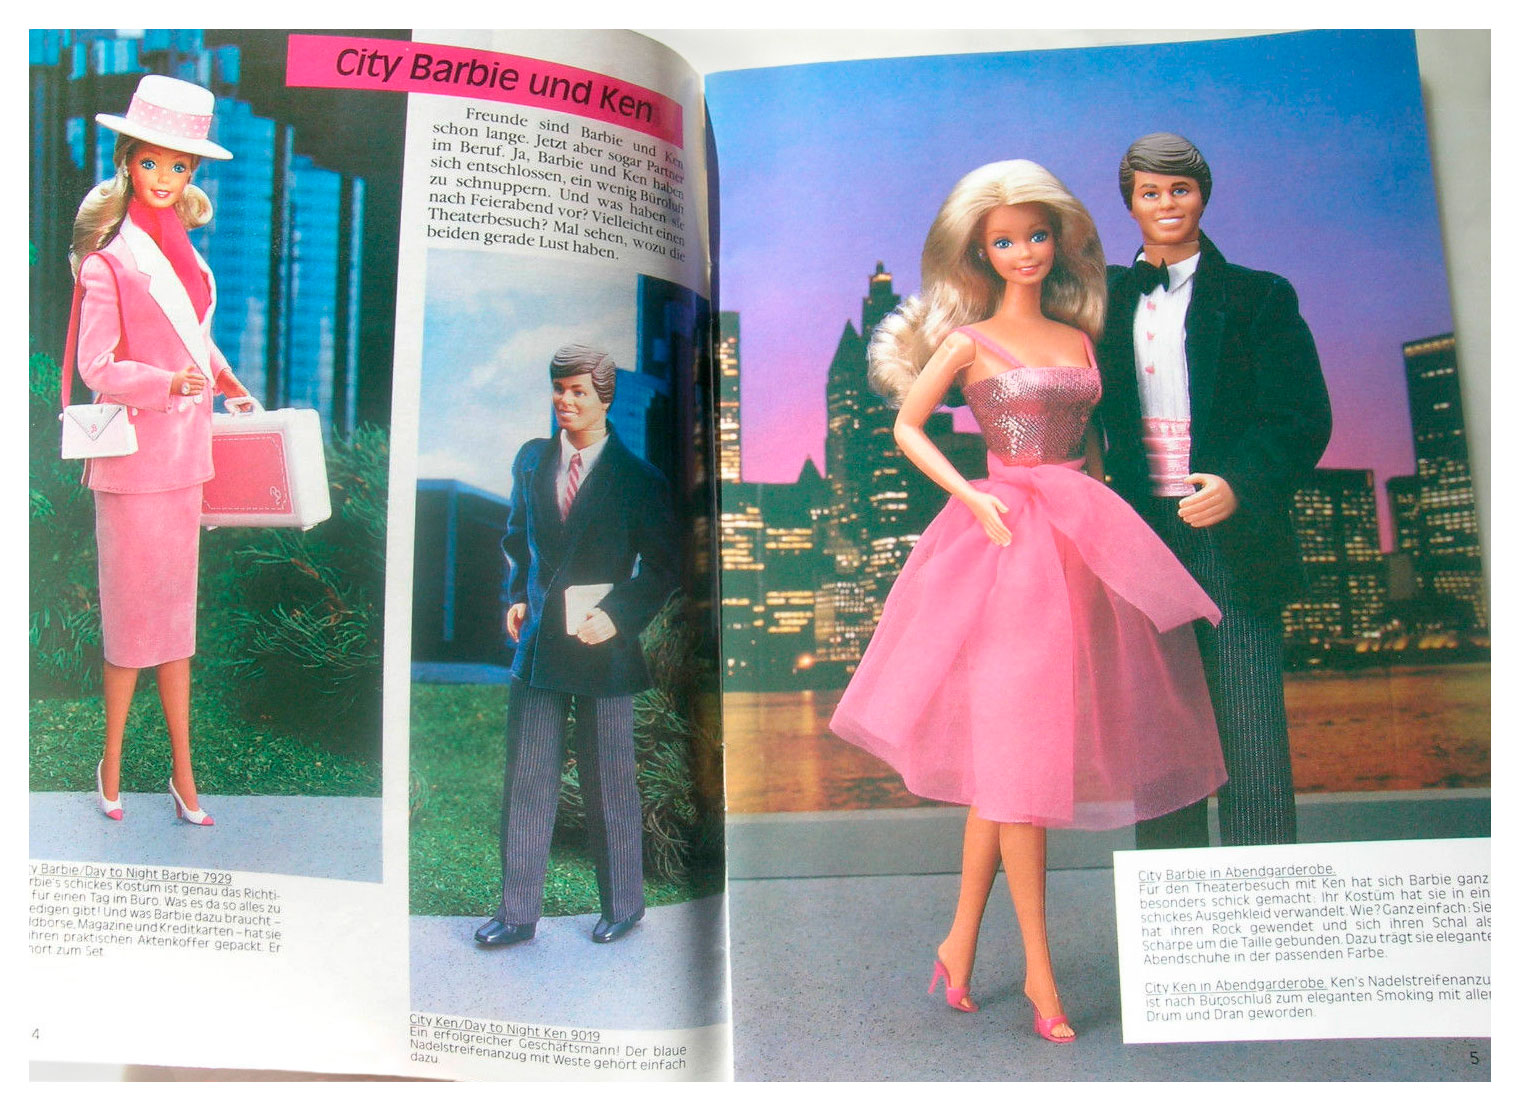 From 1985 German Barbie Journal